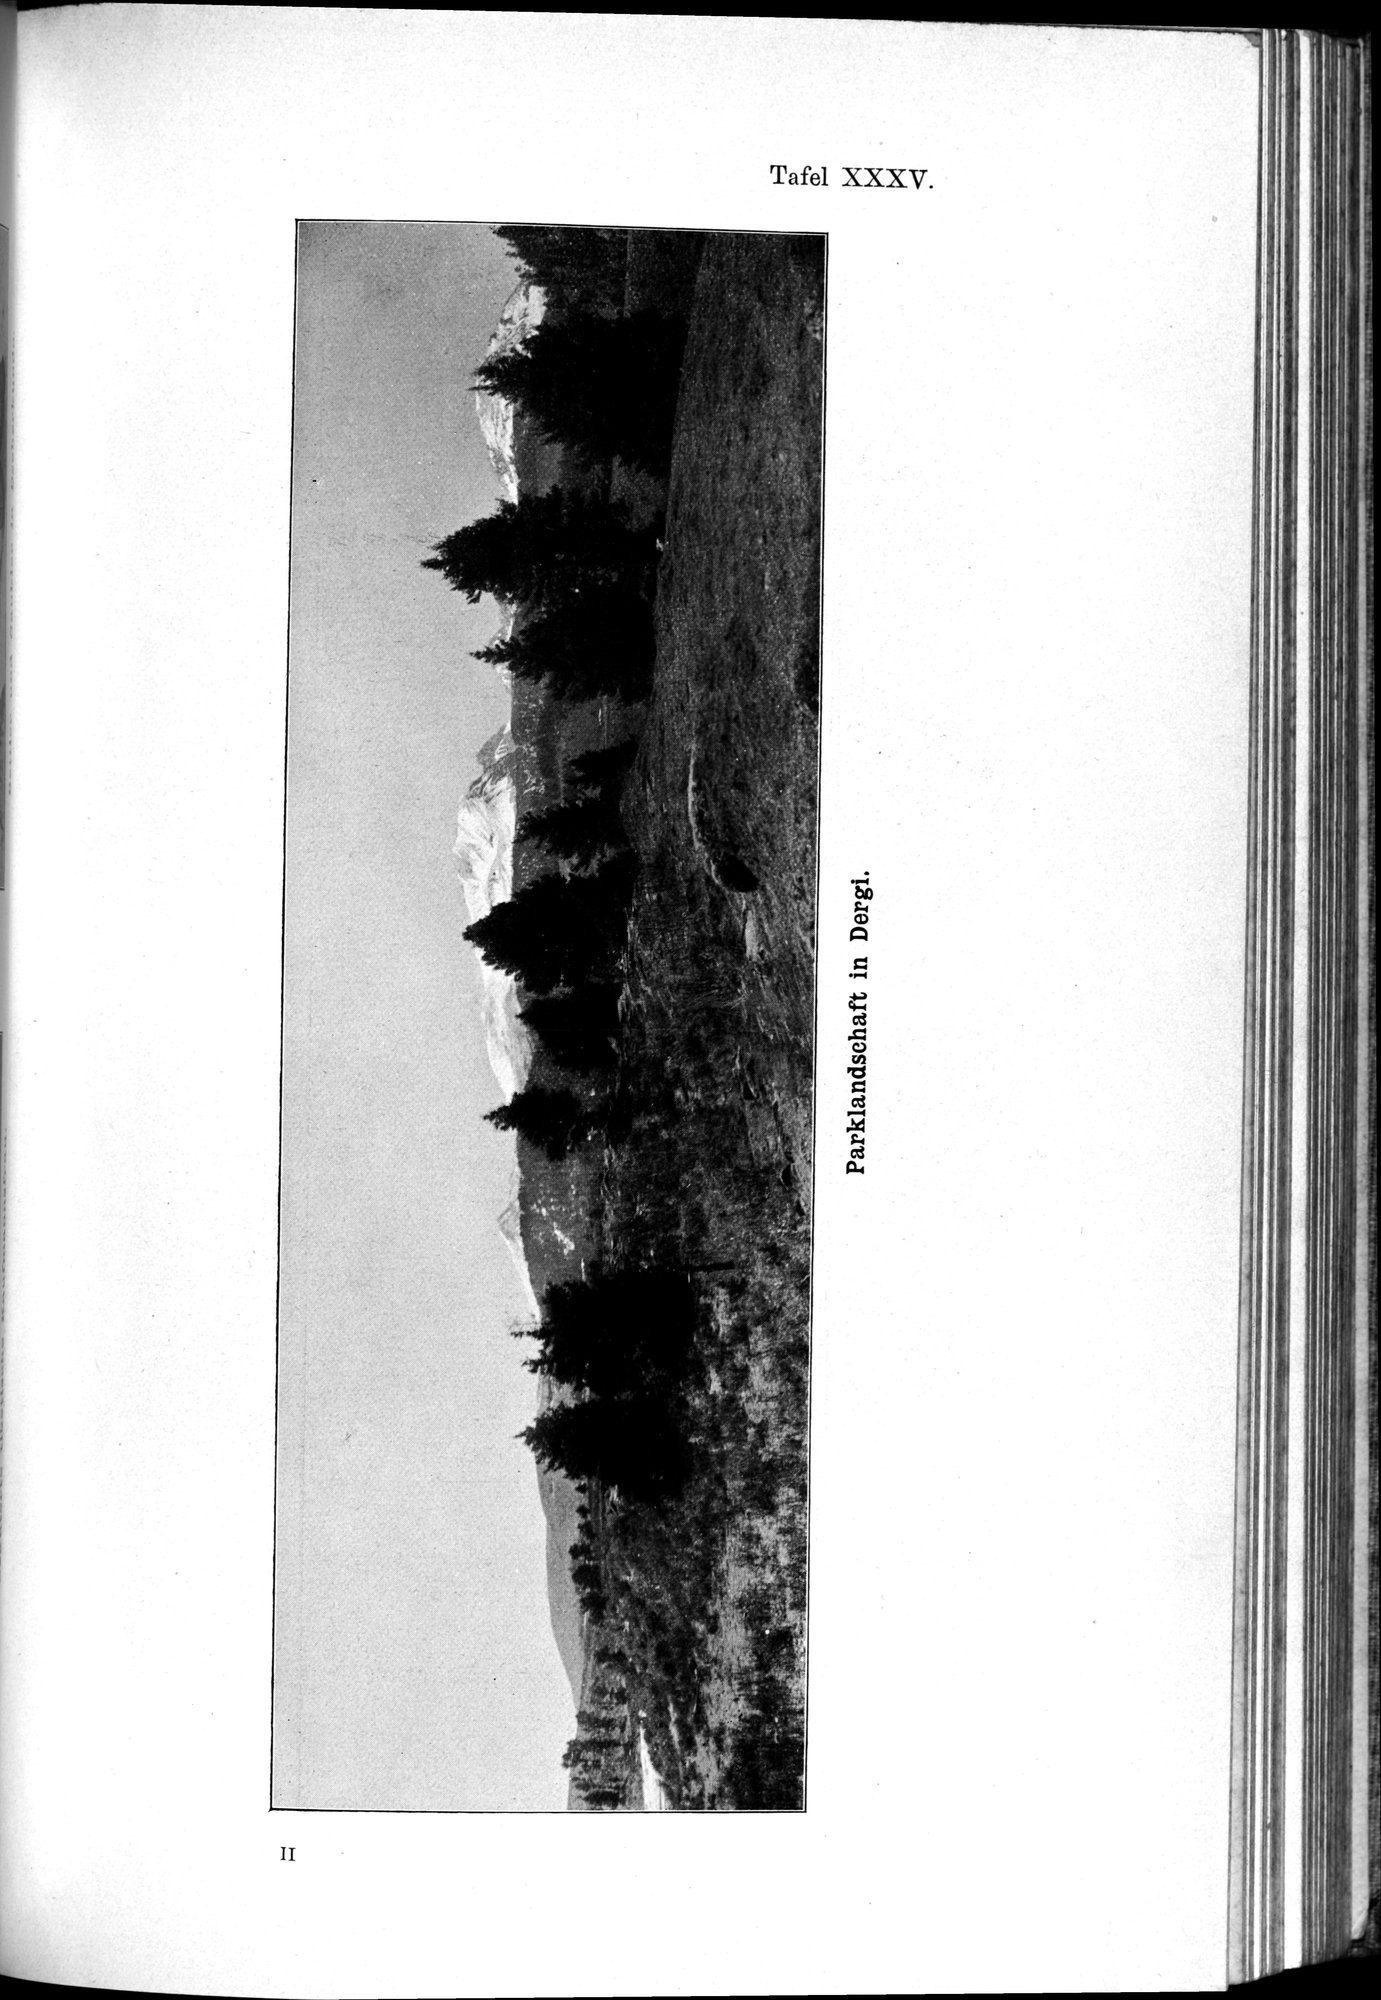 Meine Tibetreise : vol.2 / Page 213 (Grayscale High Resolution Image)